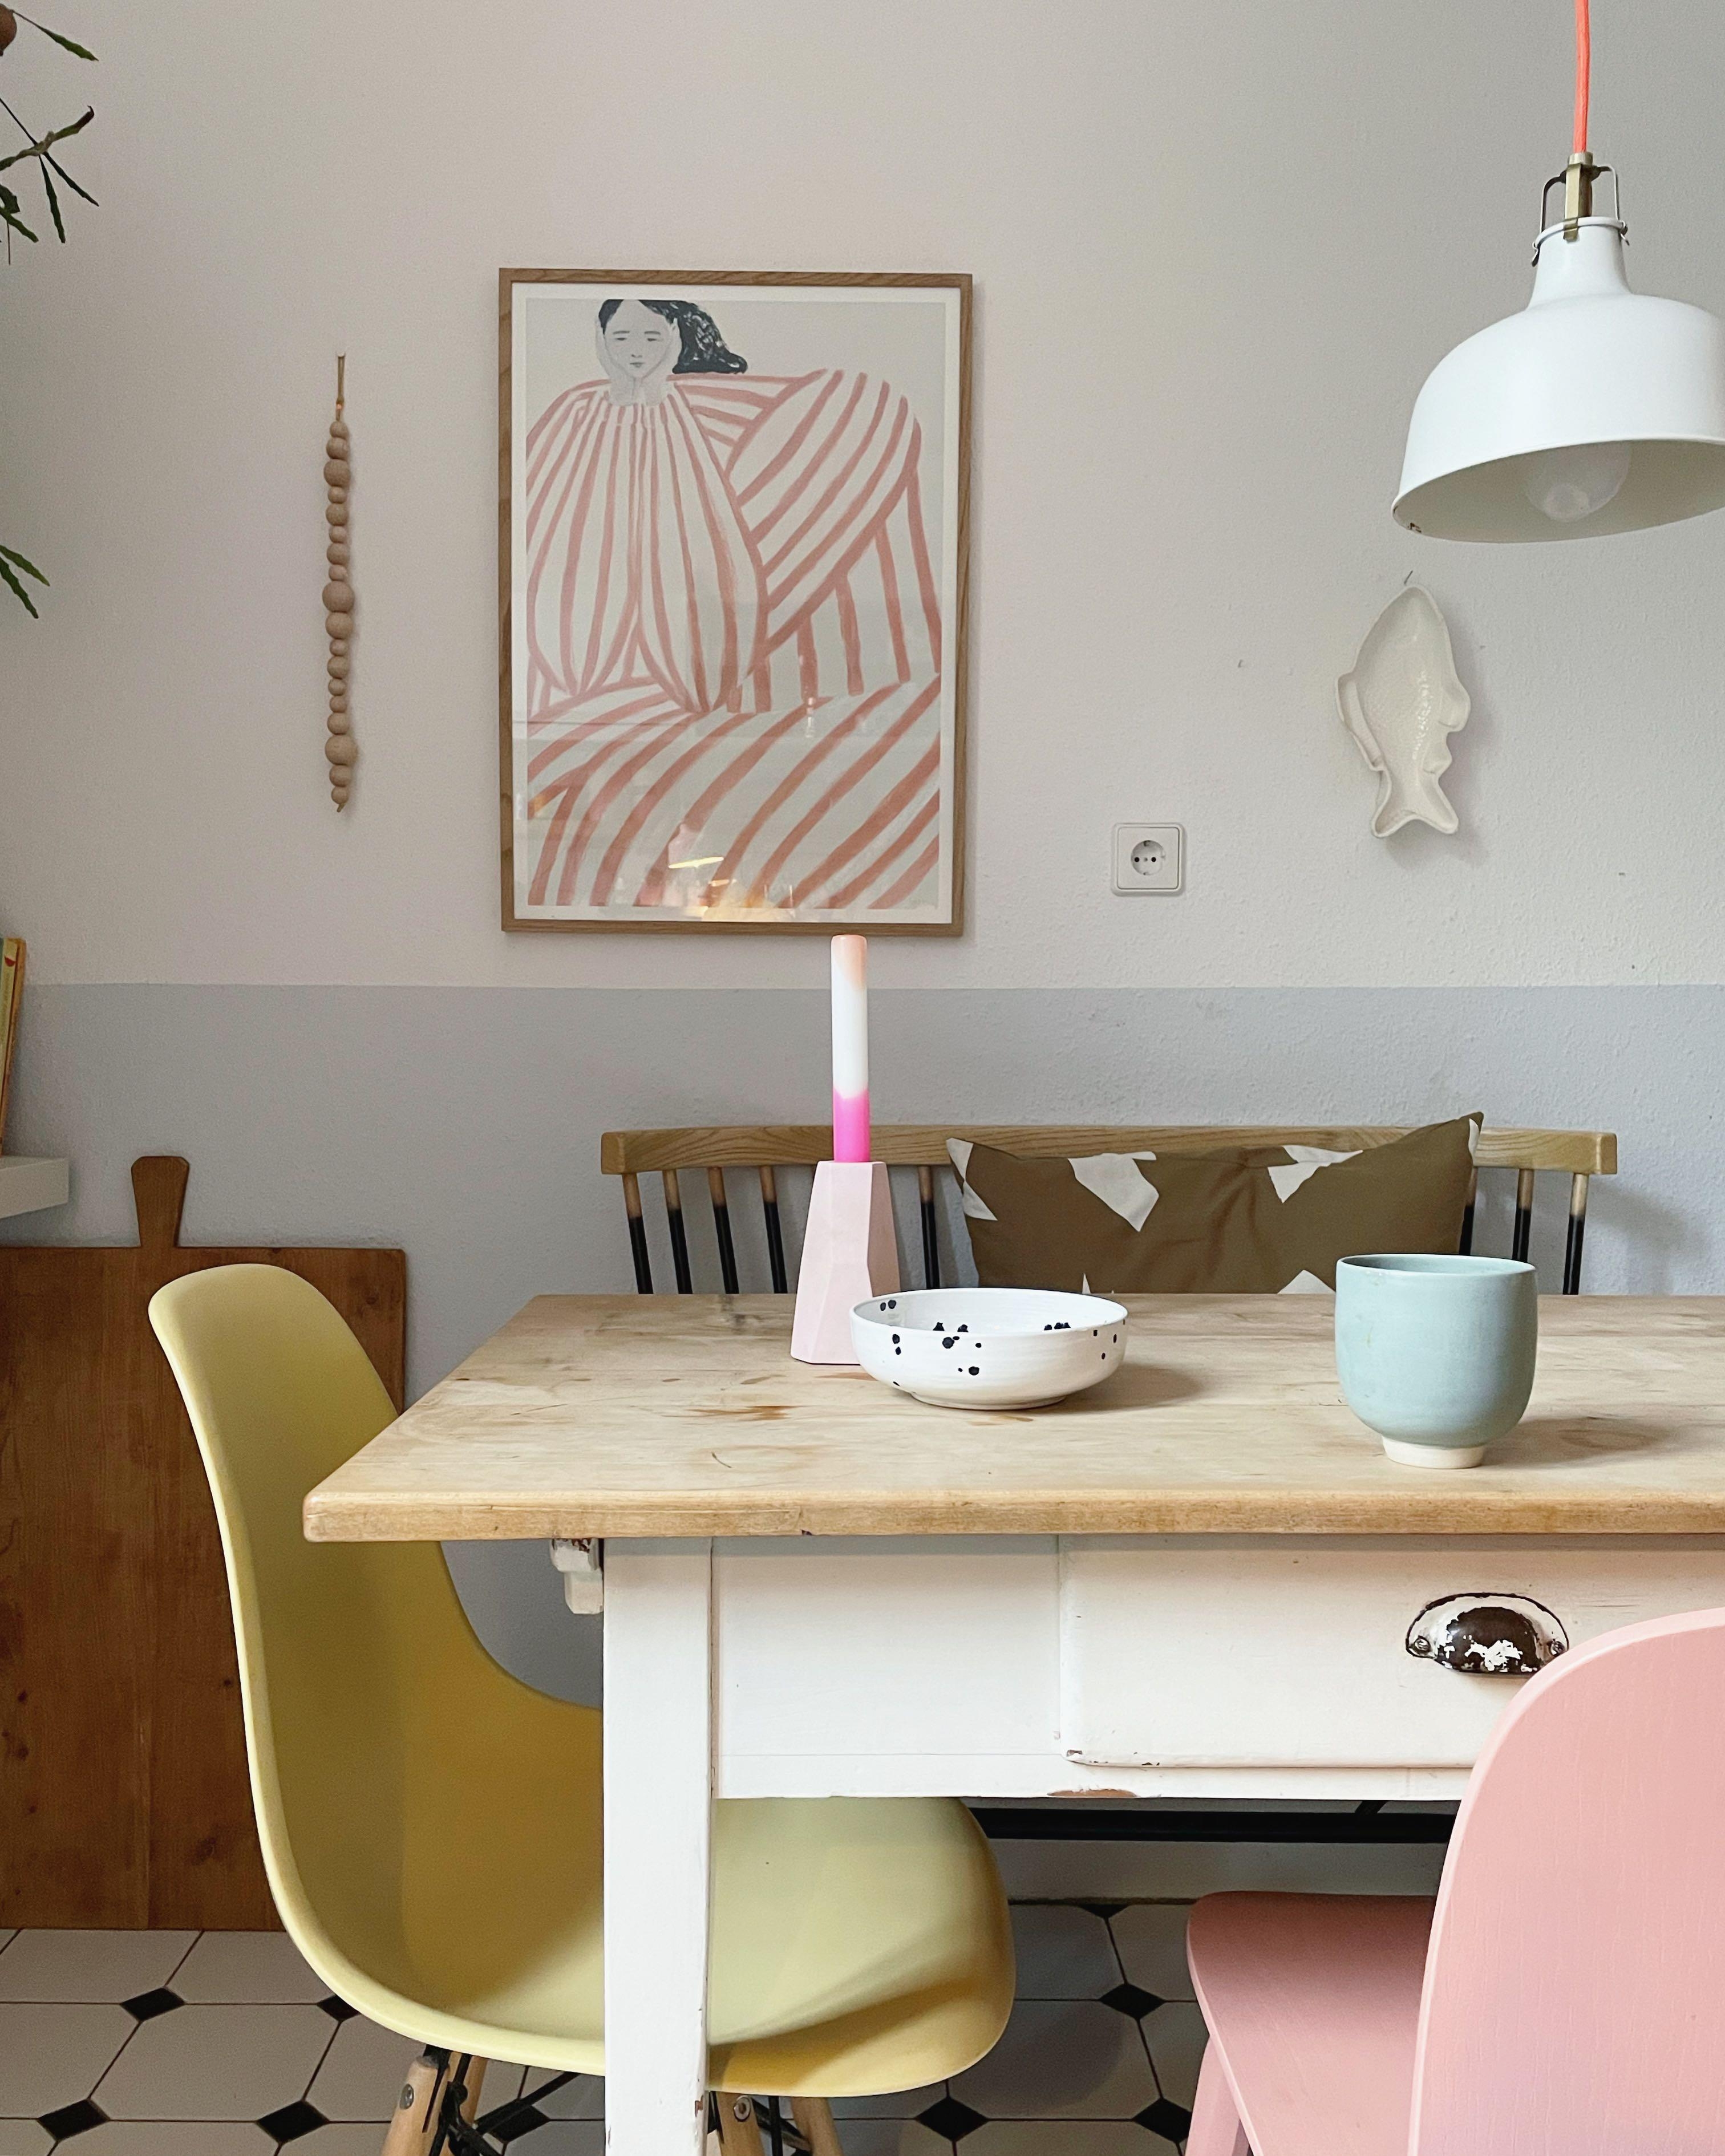 #kitchenstyle #cosycorner #couchstyle #home #interior #pastell @Studiobloom_design